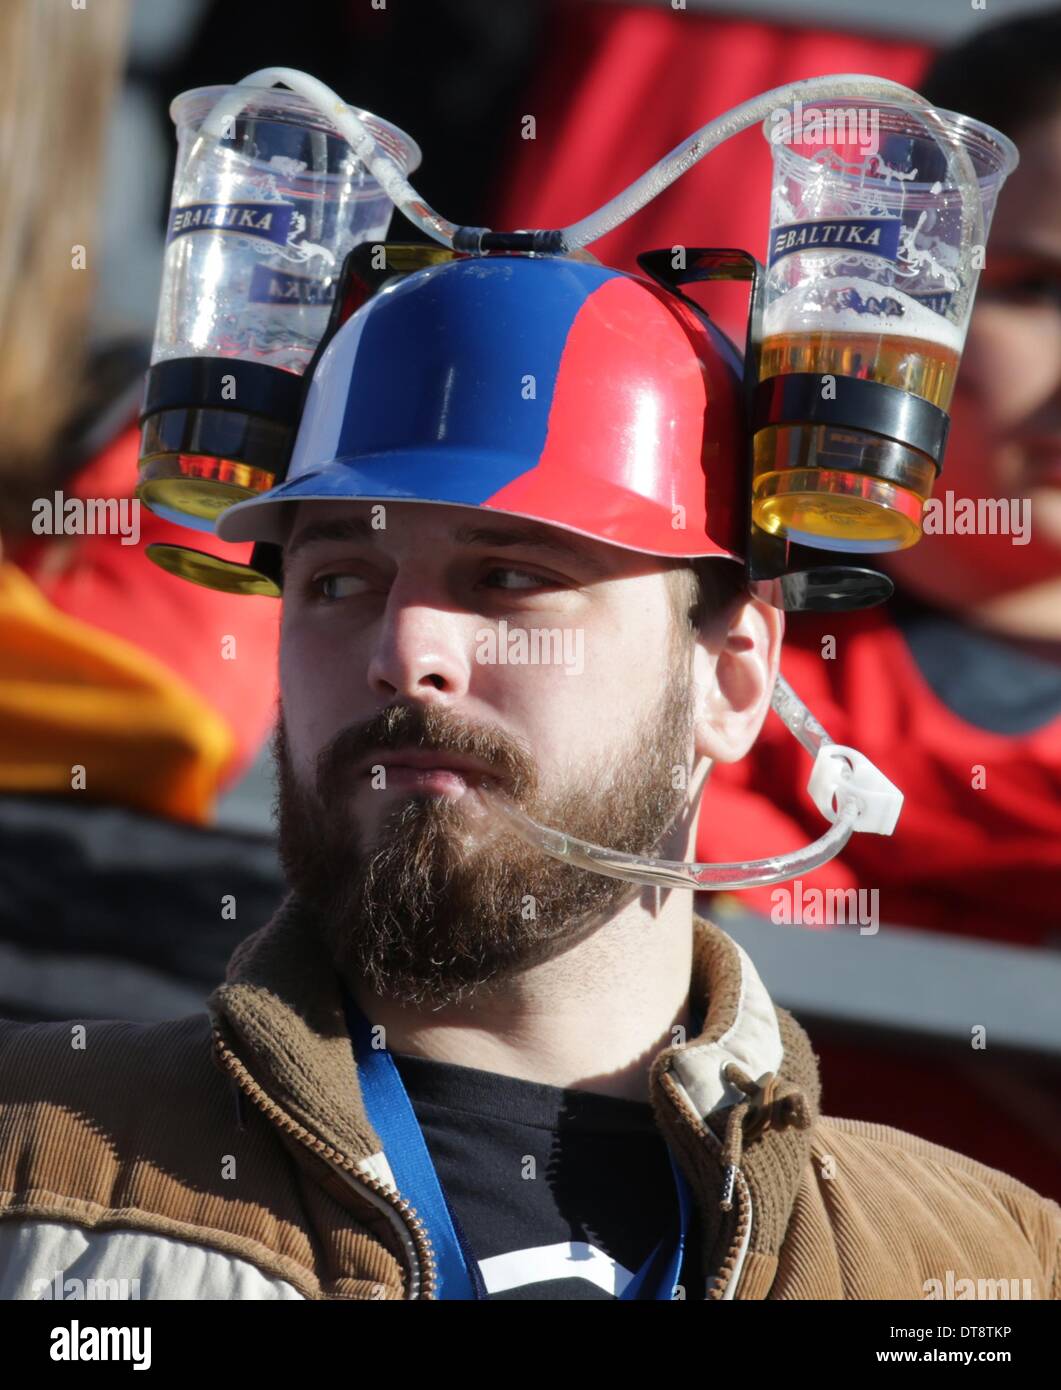 https://c8.alamy.com/comp/DT8TKP/sochi-russia-12th-february-2014-a-spectator-wears-a-drinking-helmet-DT8TKP.jpg